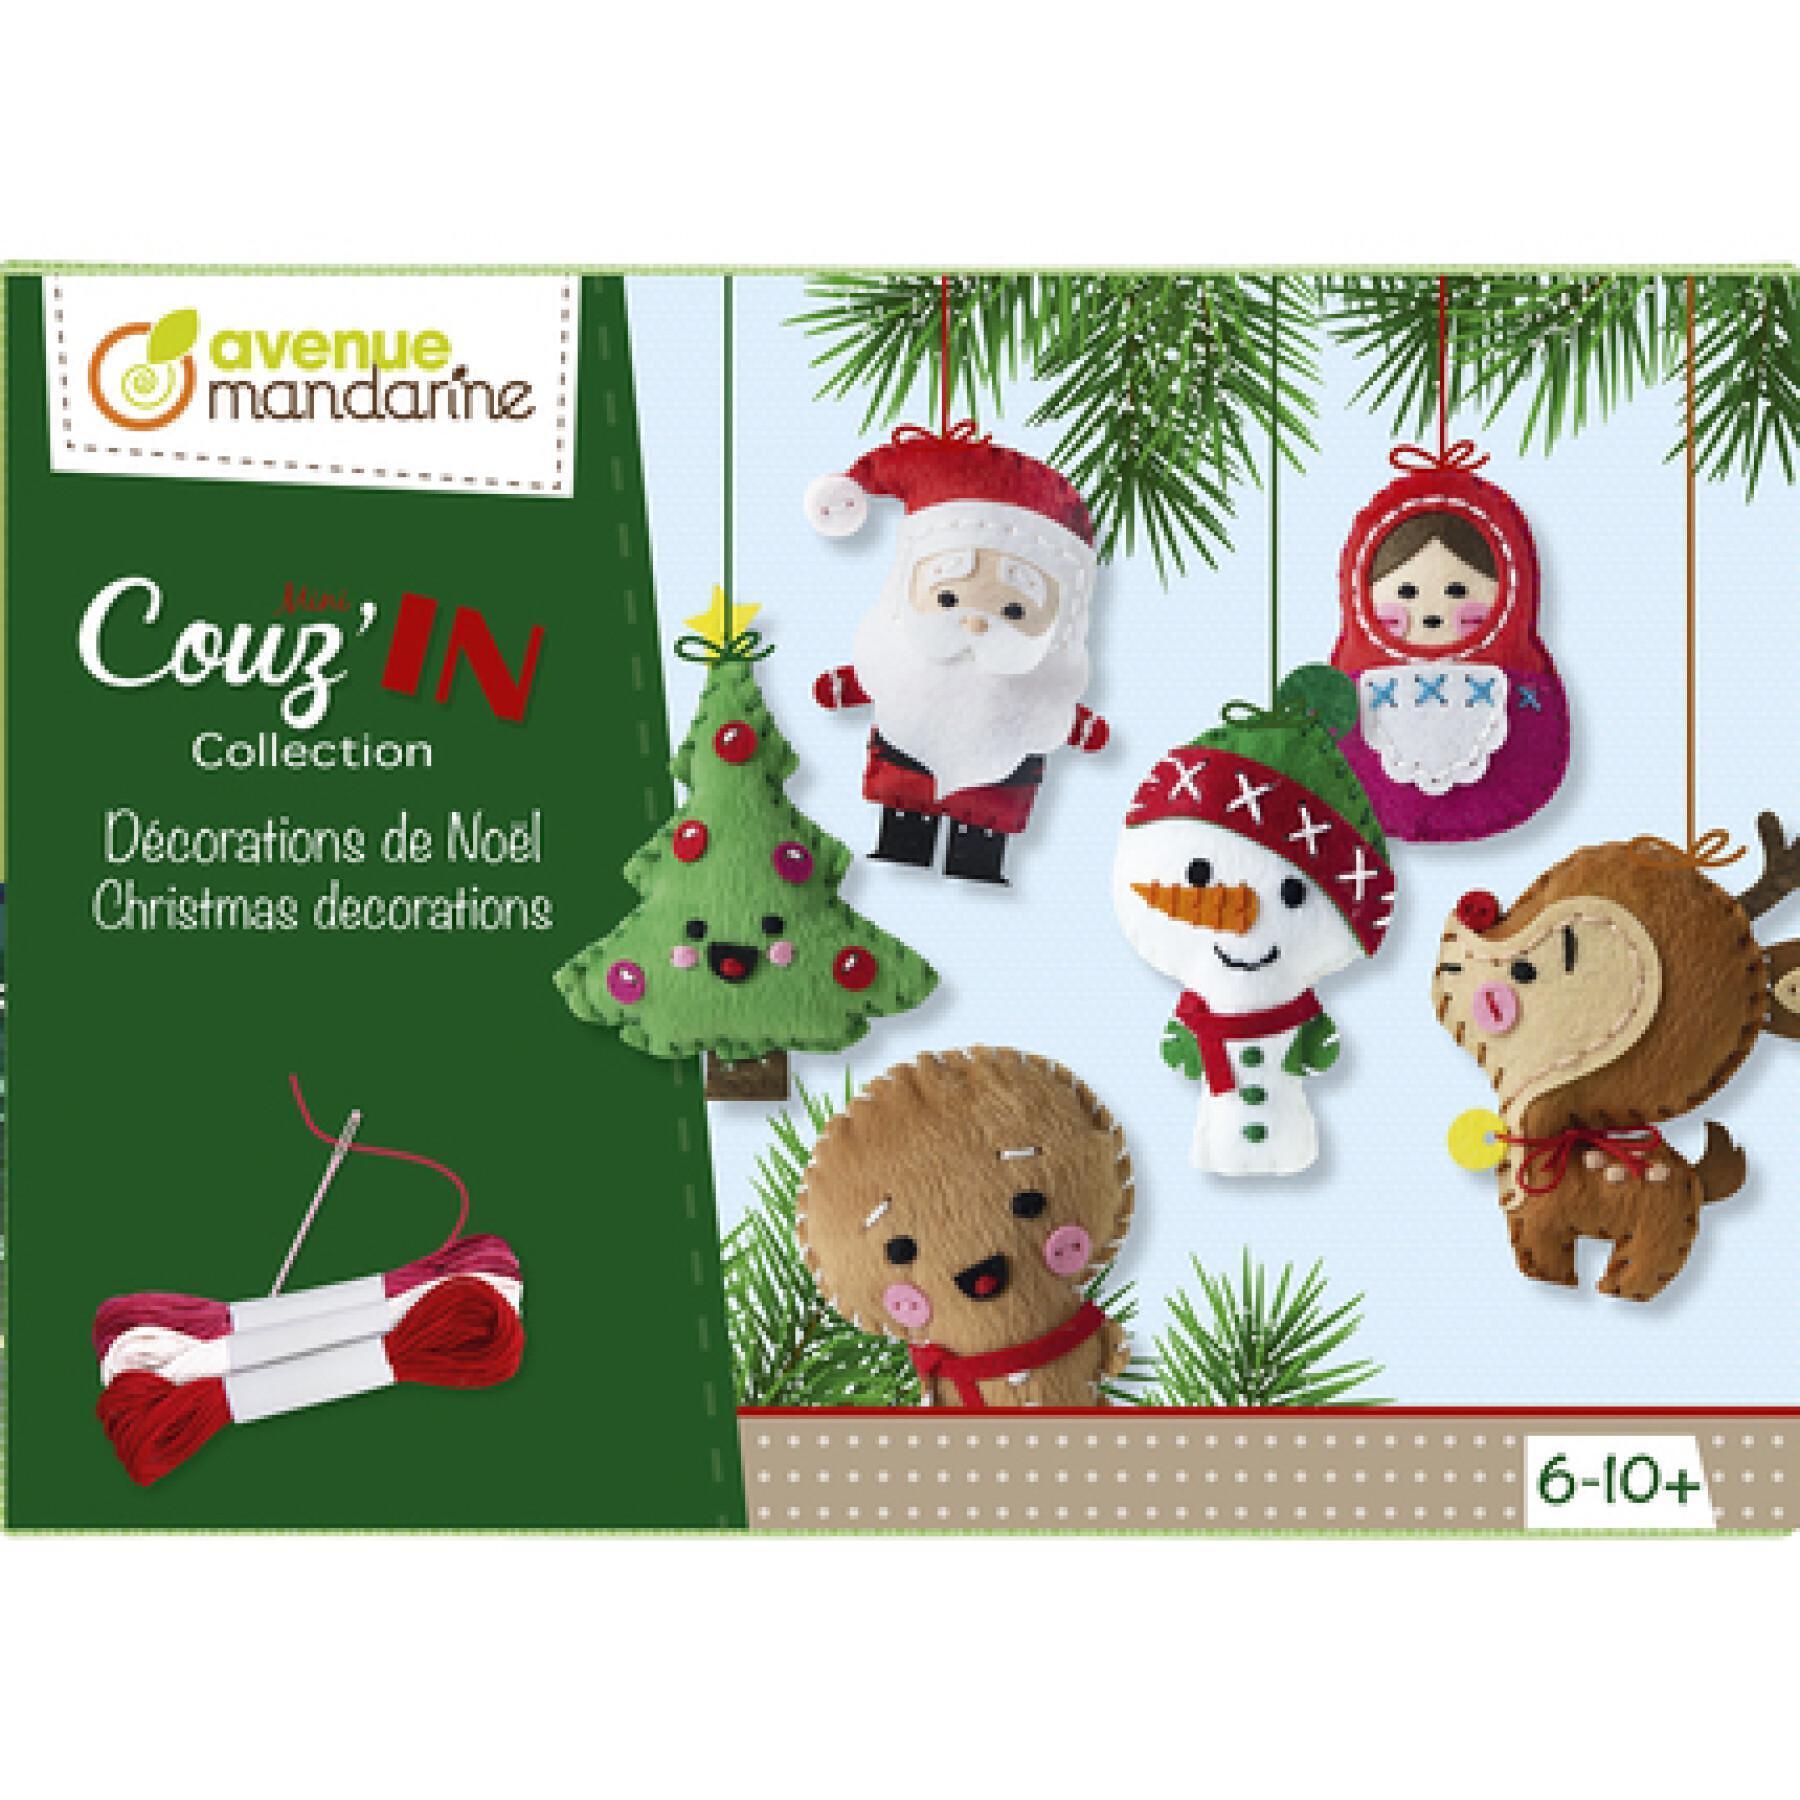 Christmas decoration sewing kit Avenue Mandarine Mini Couz'IN